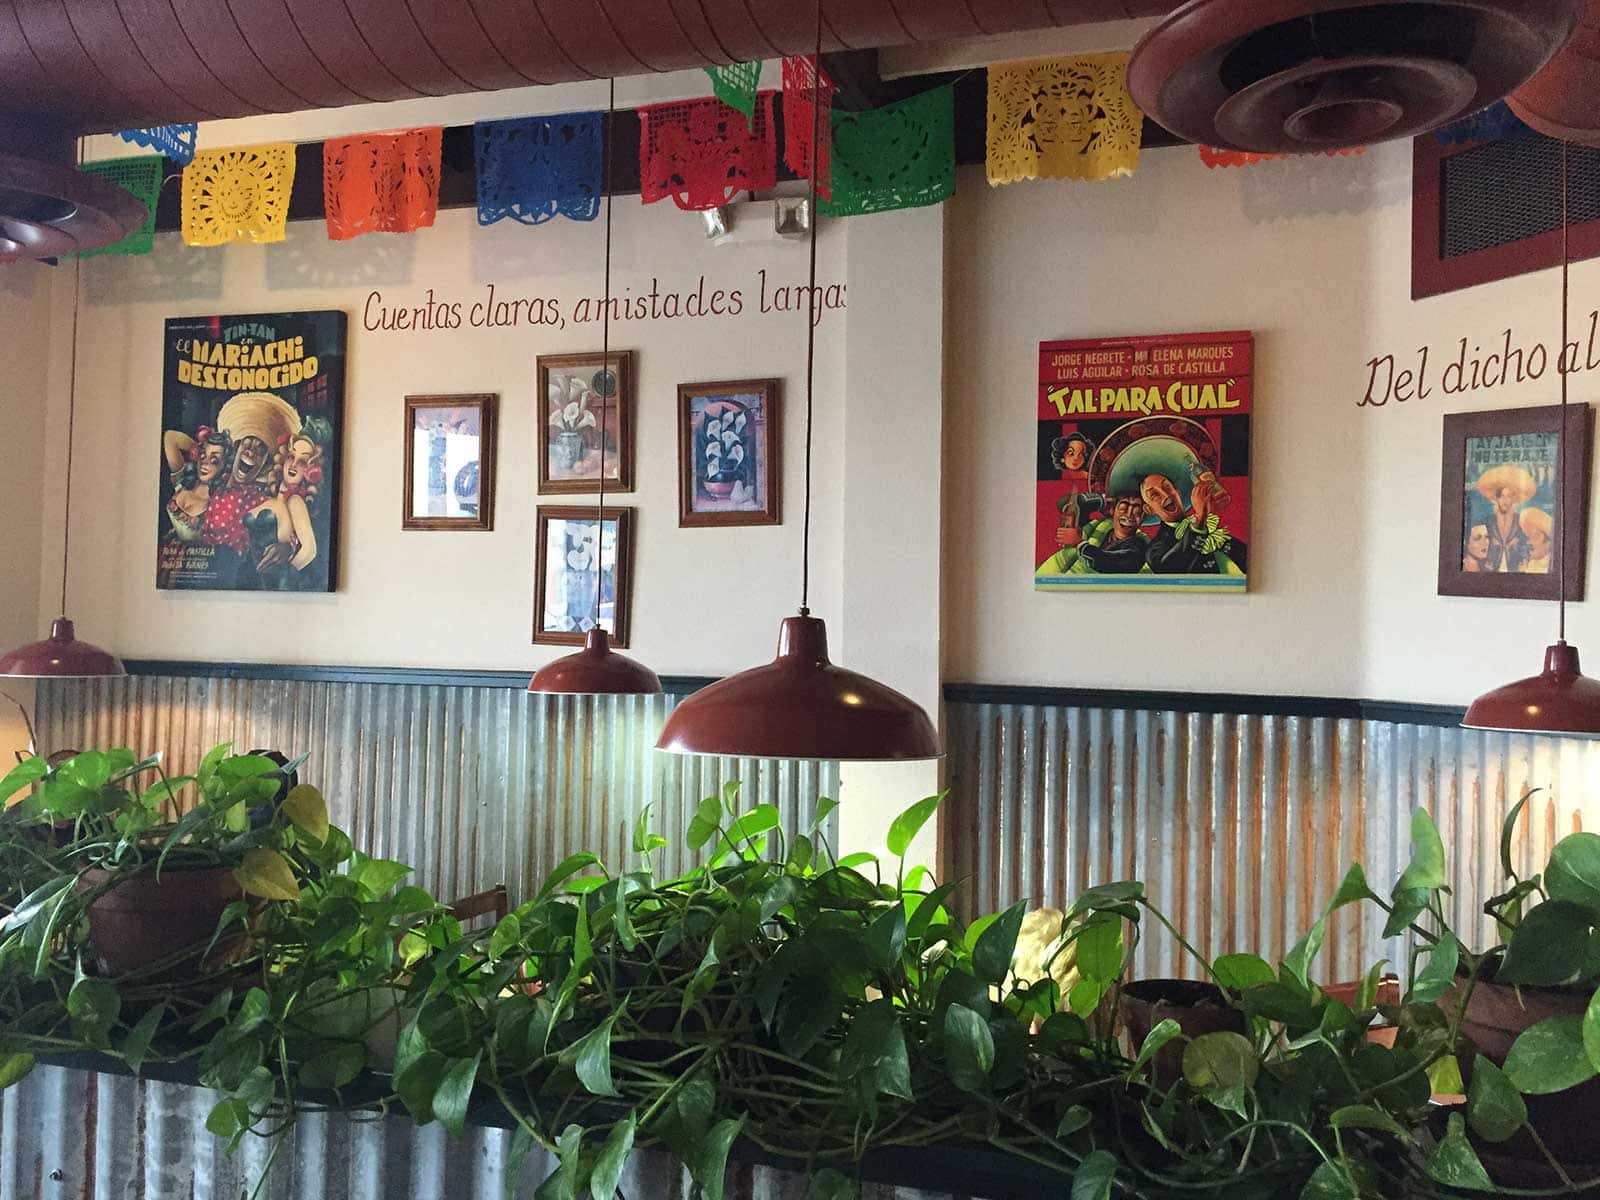 Tio's Mexican Restaurant - Riverside, CA, US, nearest mexican restaurant